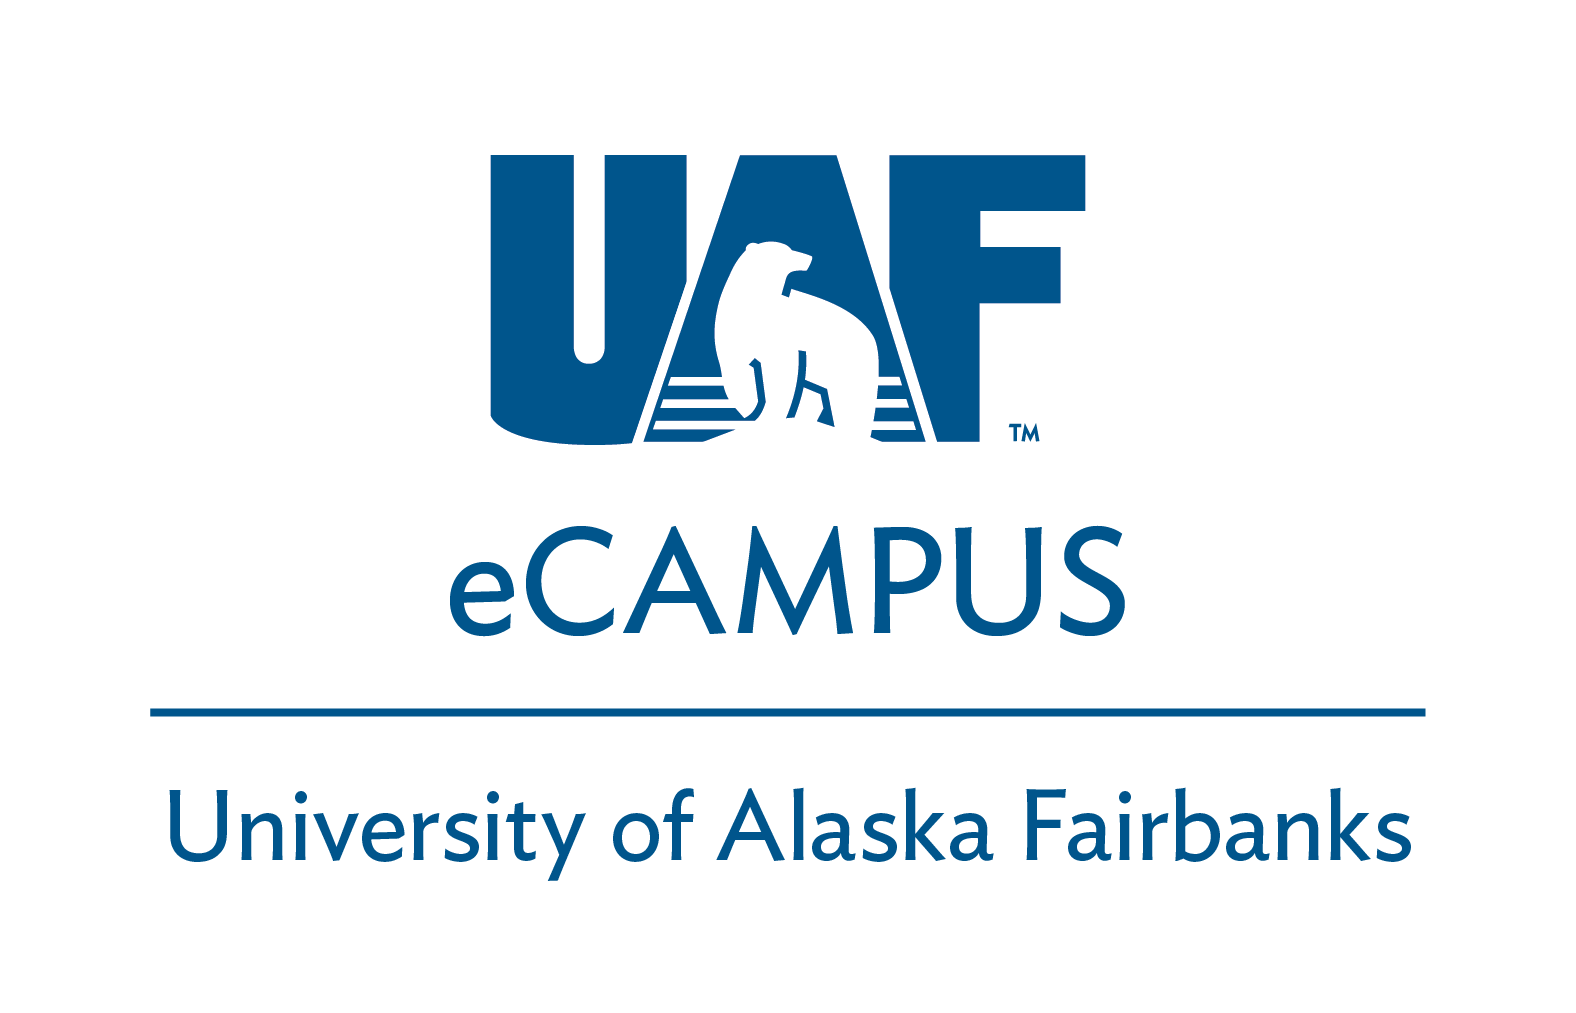 UAF eCampus logo